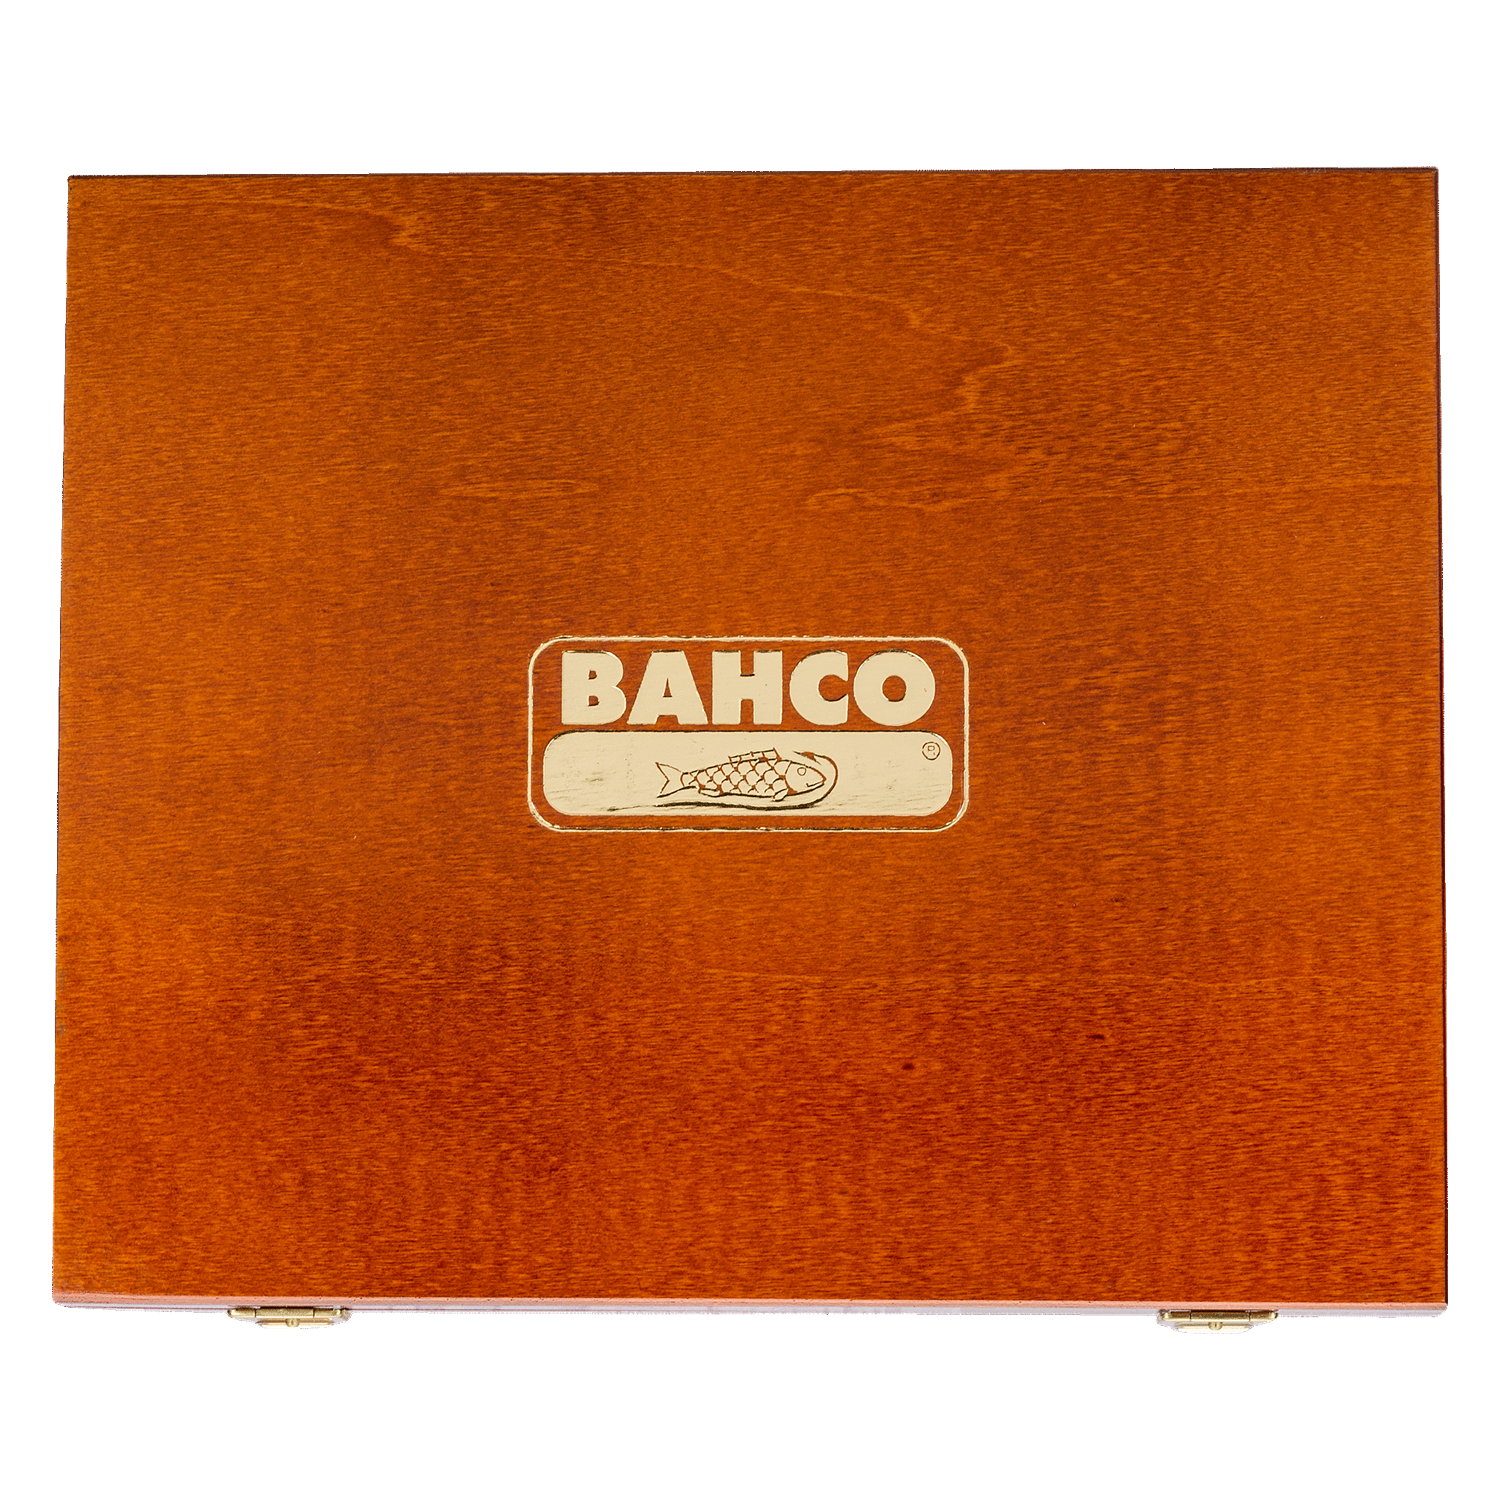 BAHCO 434-S6-EUR ERGO Splitproof Chisel Set - 6 Pcs/ Wooden Box - Premium Chisel Set from BAHCO - Shop now at Yew Aik.